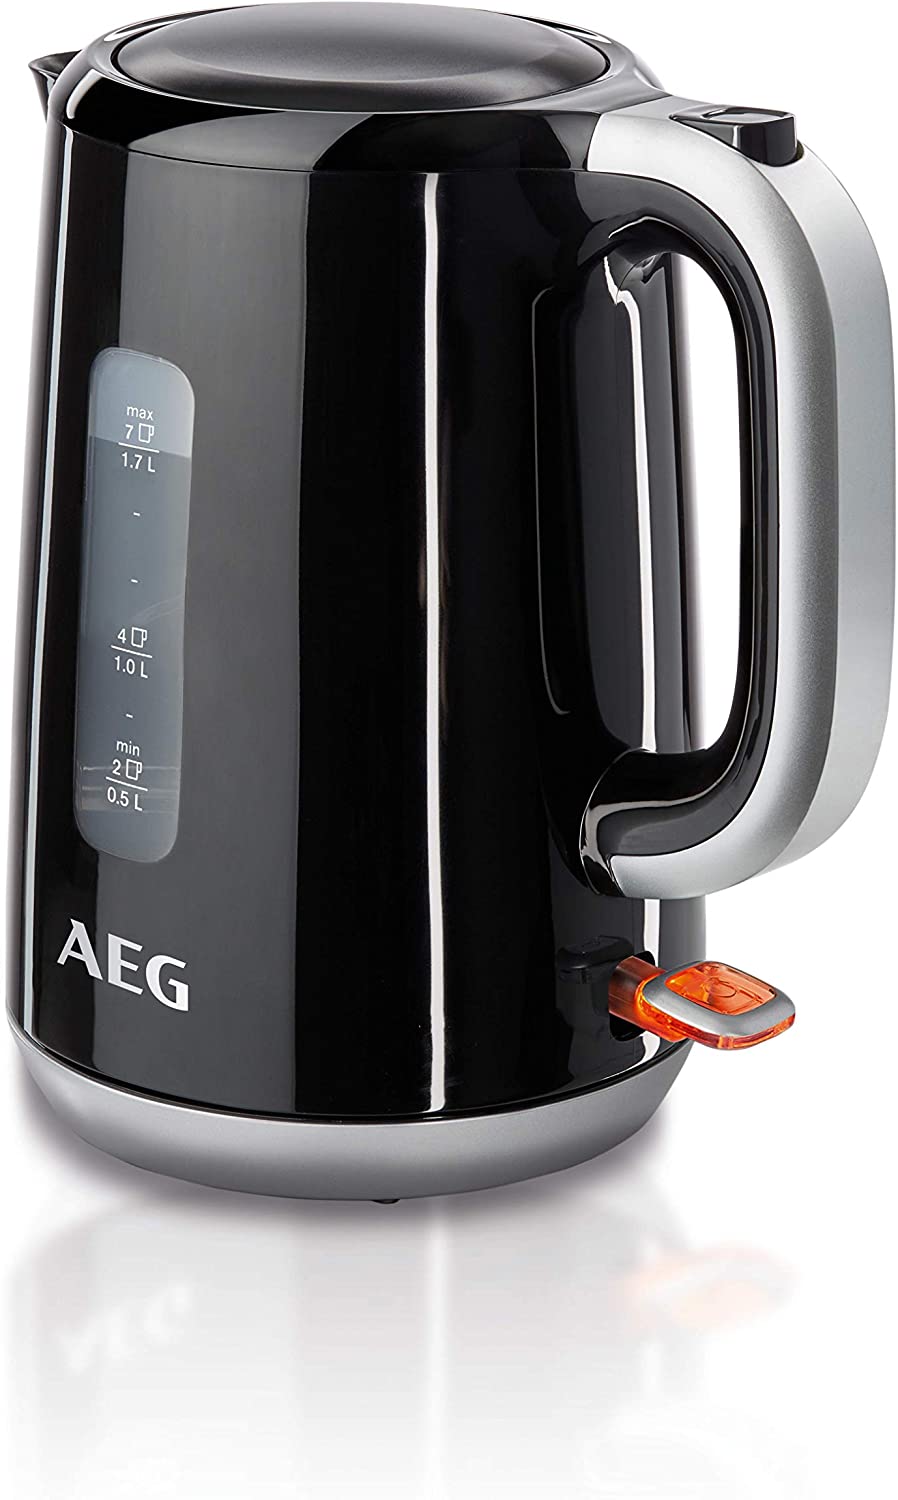 AEG EWA3300 AEG EWA 3300 express water cooker (1.5 liters, fast boiling thanks to powerful 2200 watts, automatic safety shutdown) Black